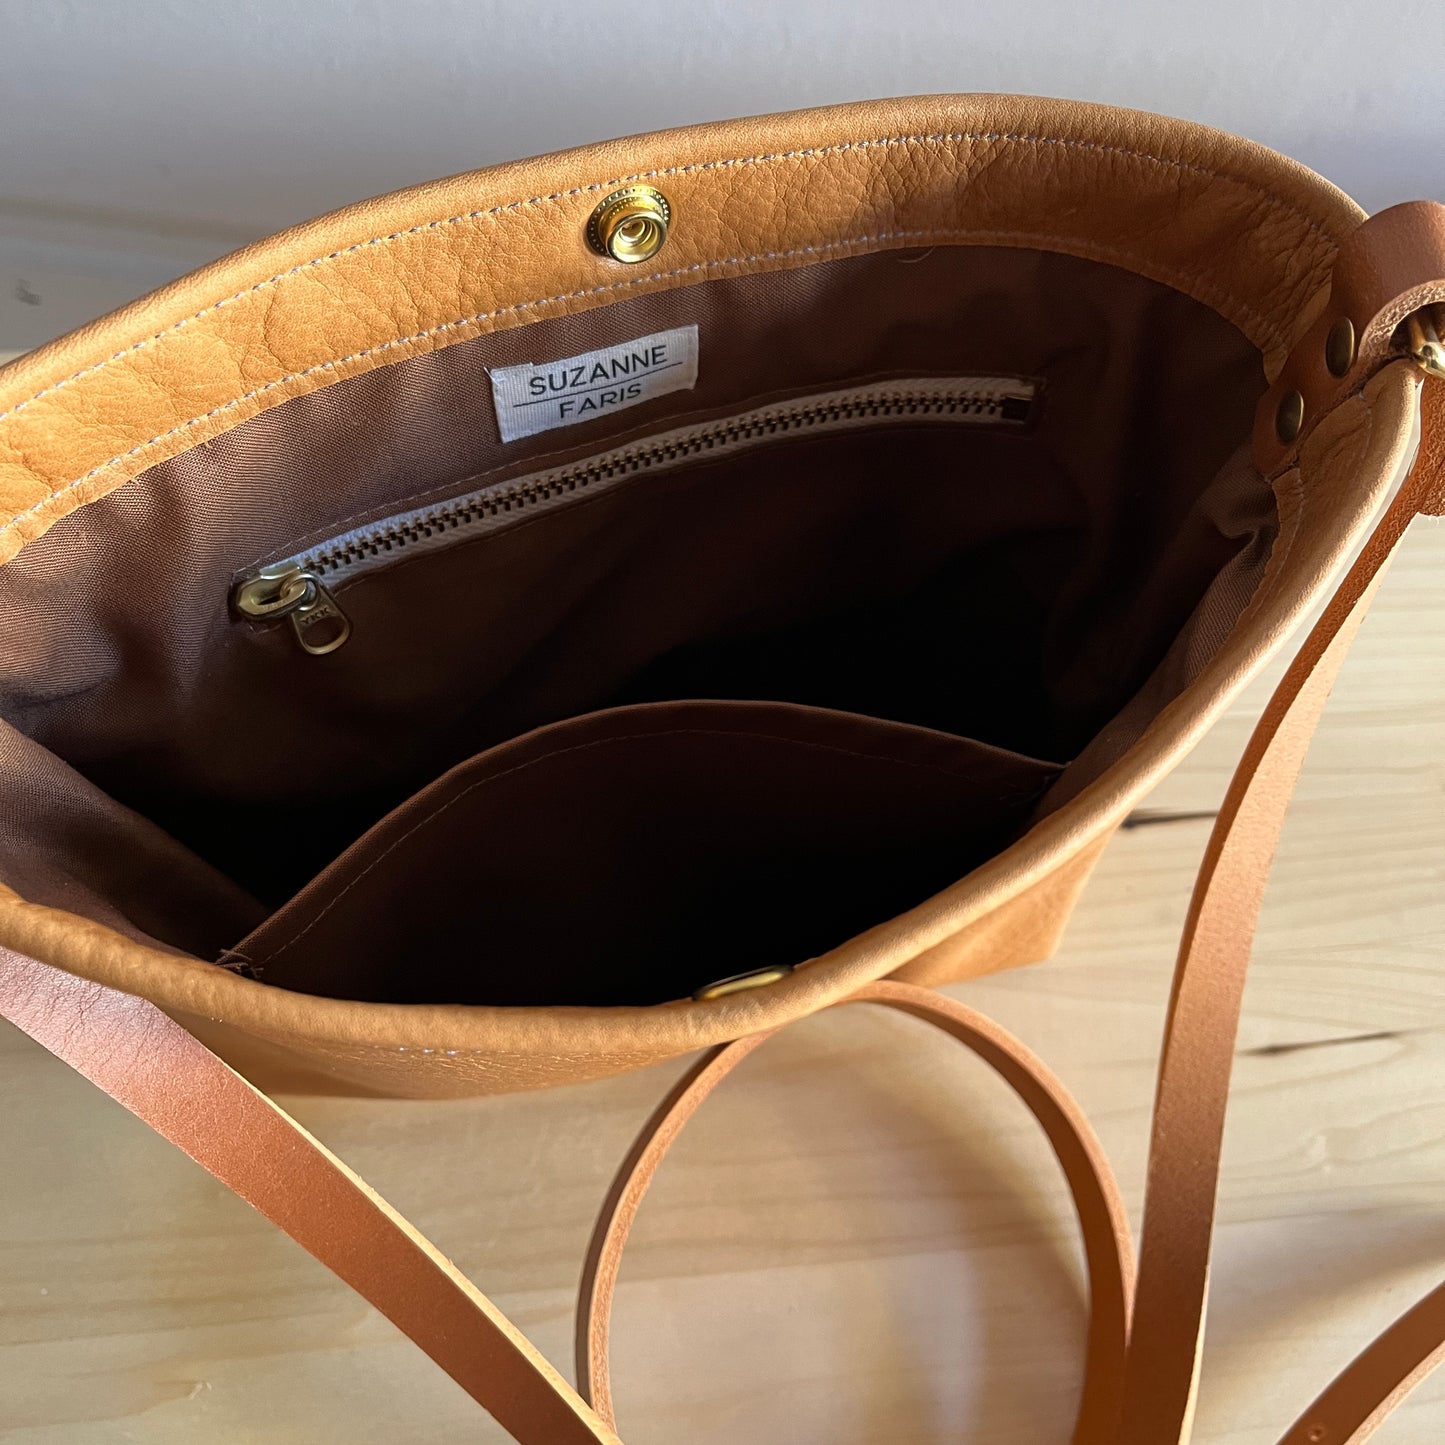 Brown interior on tan leather bag